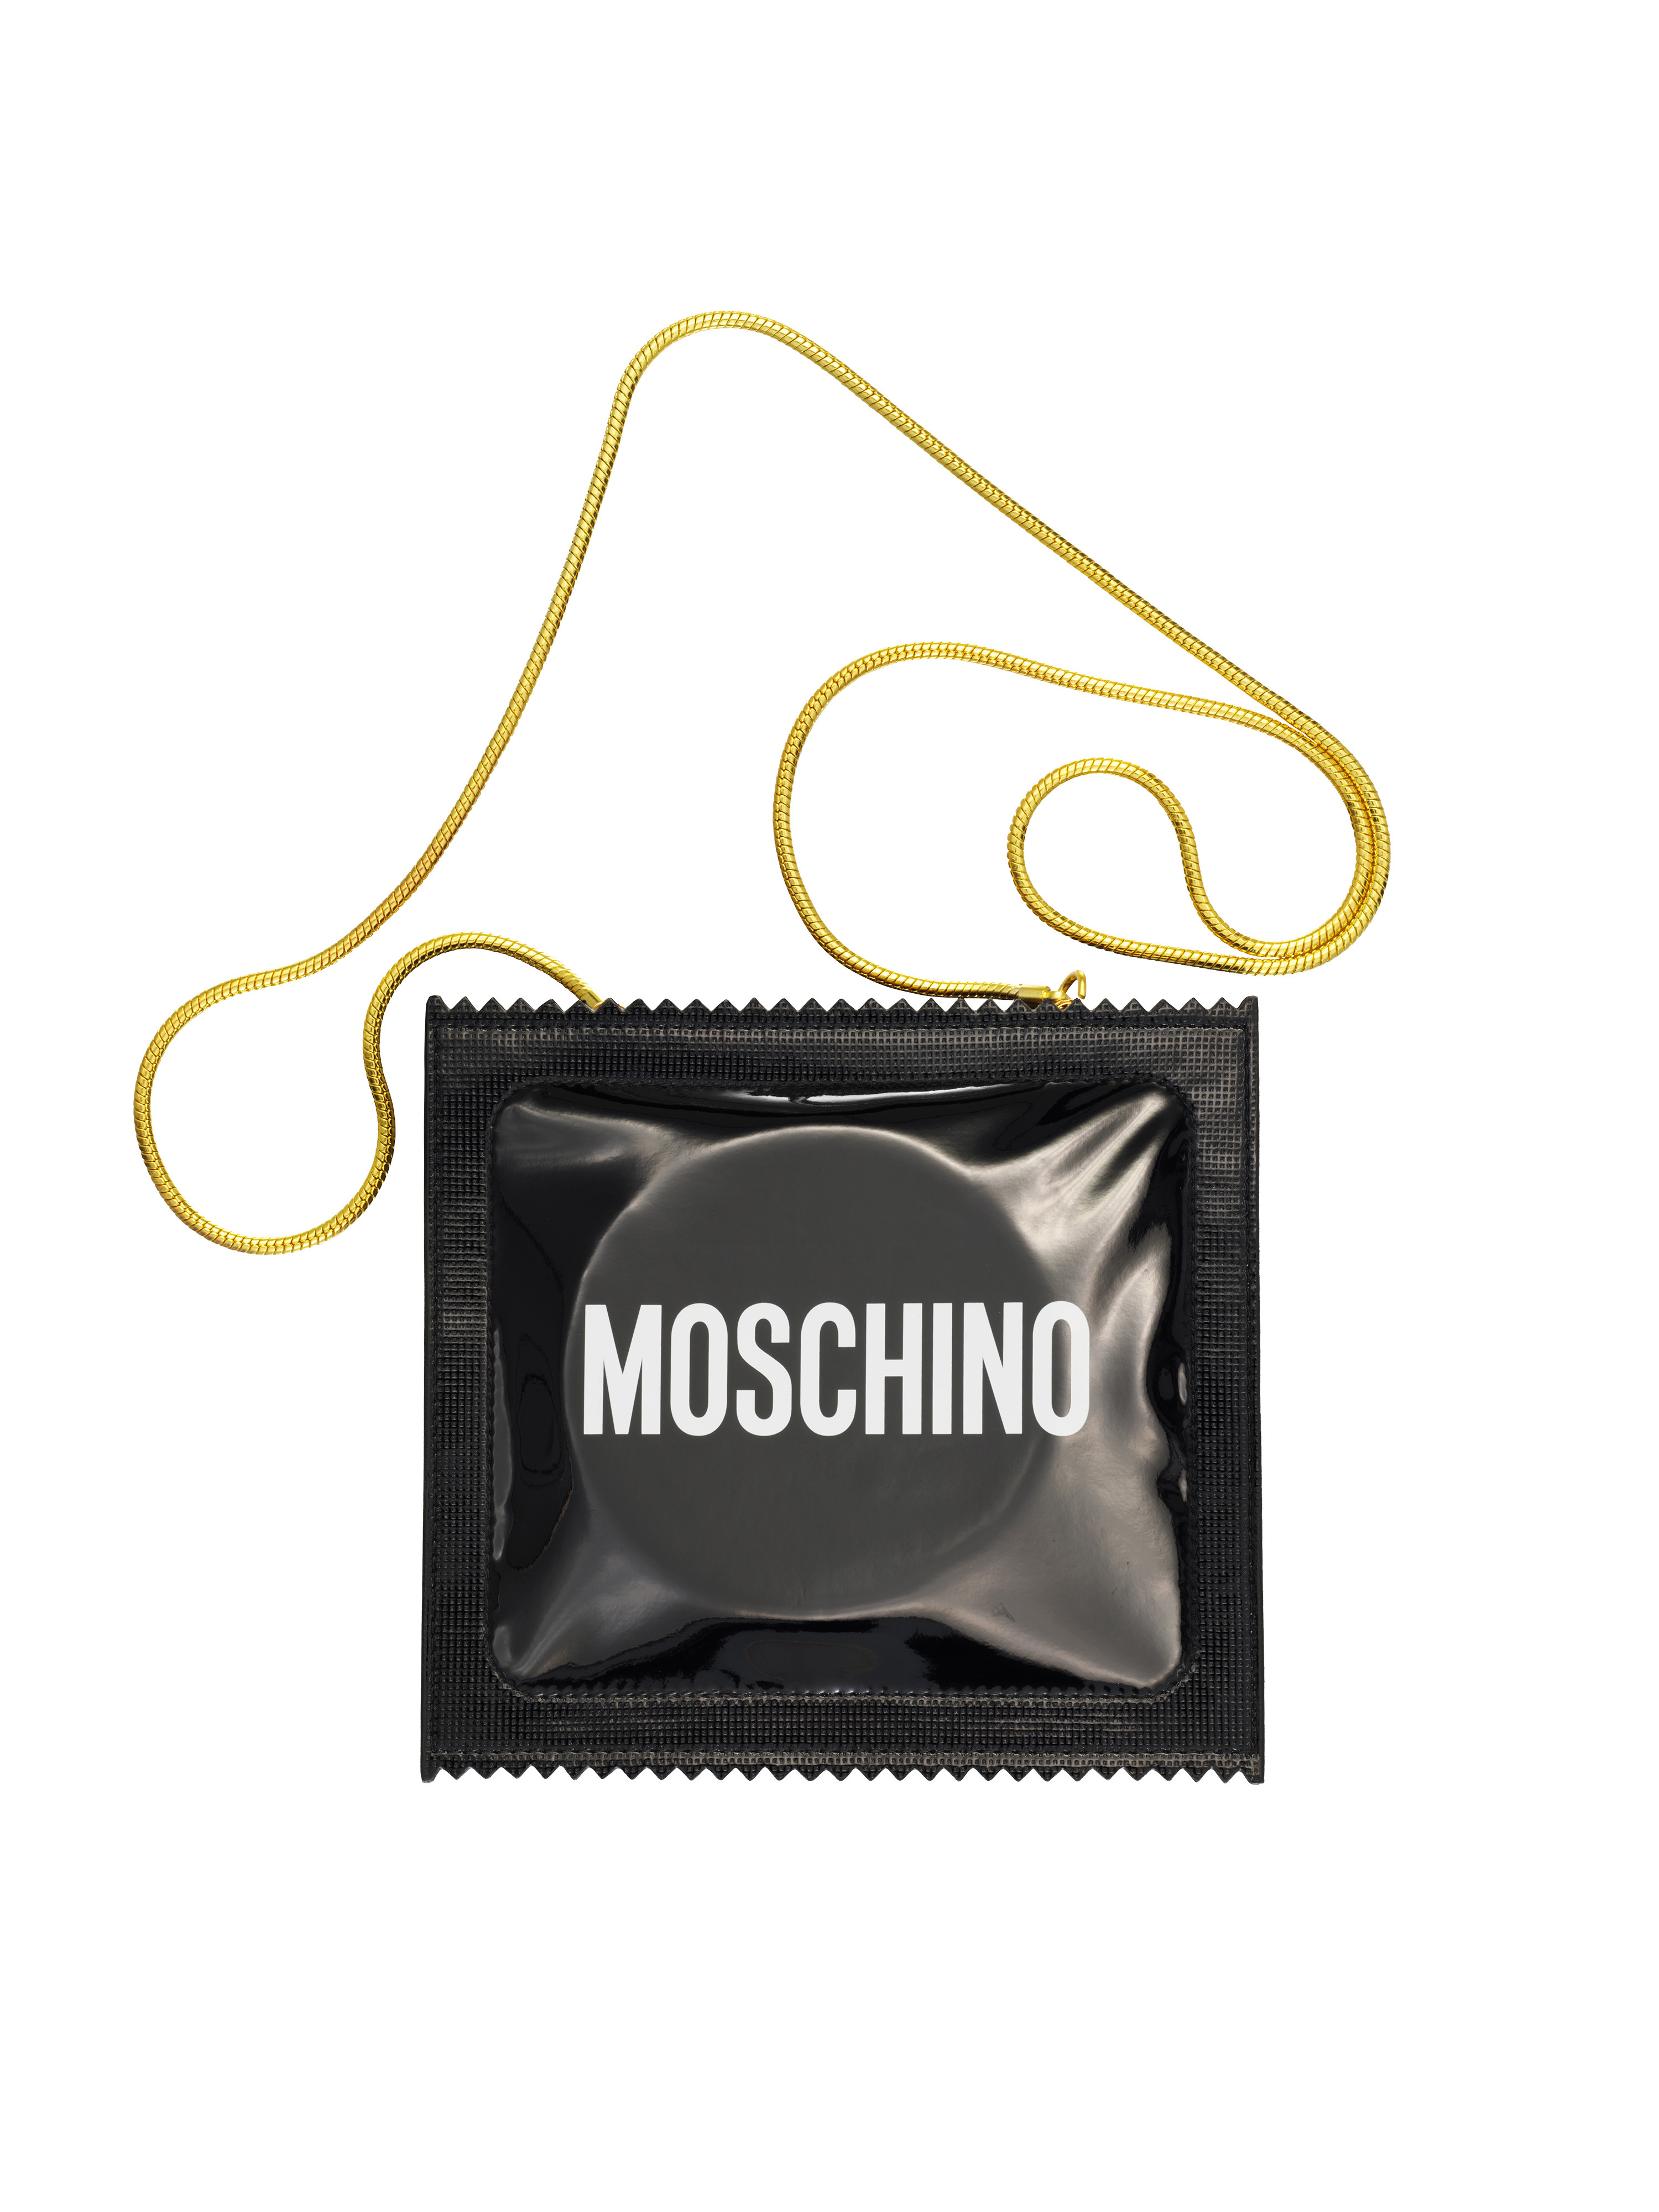 Moschino Condom Clutch $169.00 - Grazia